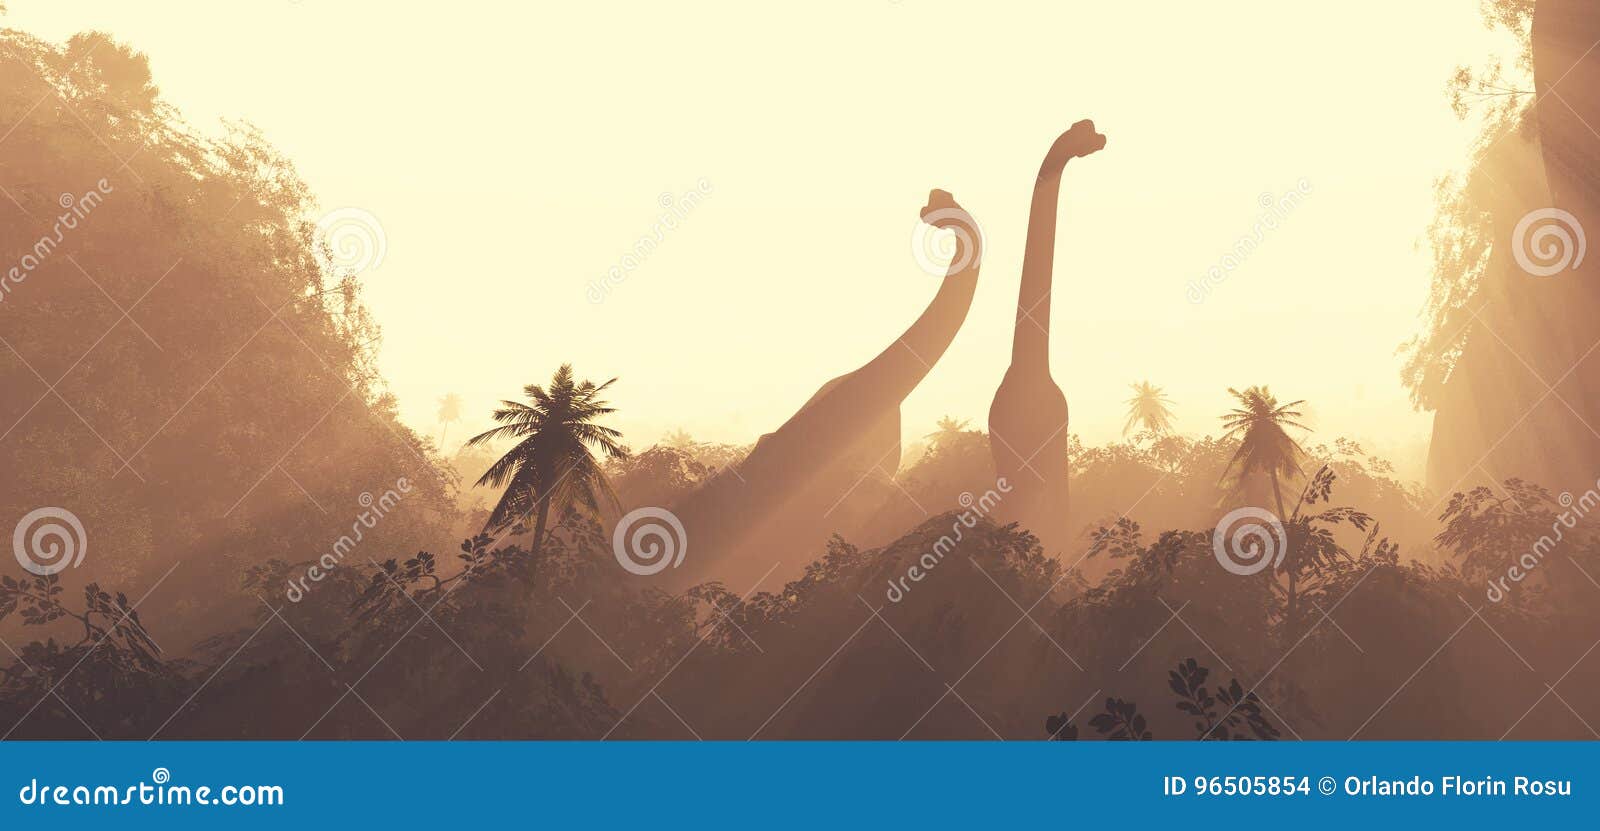 brachiosaurus dinosaurs